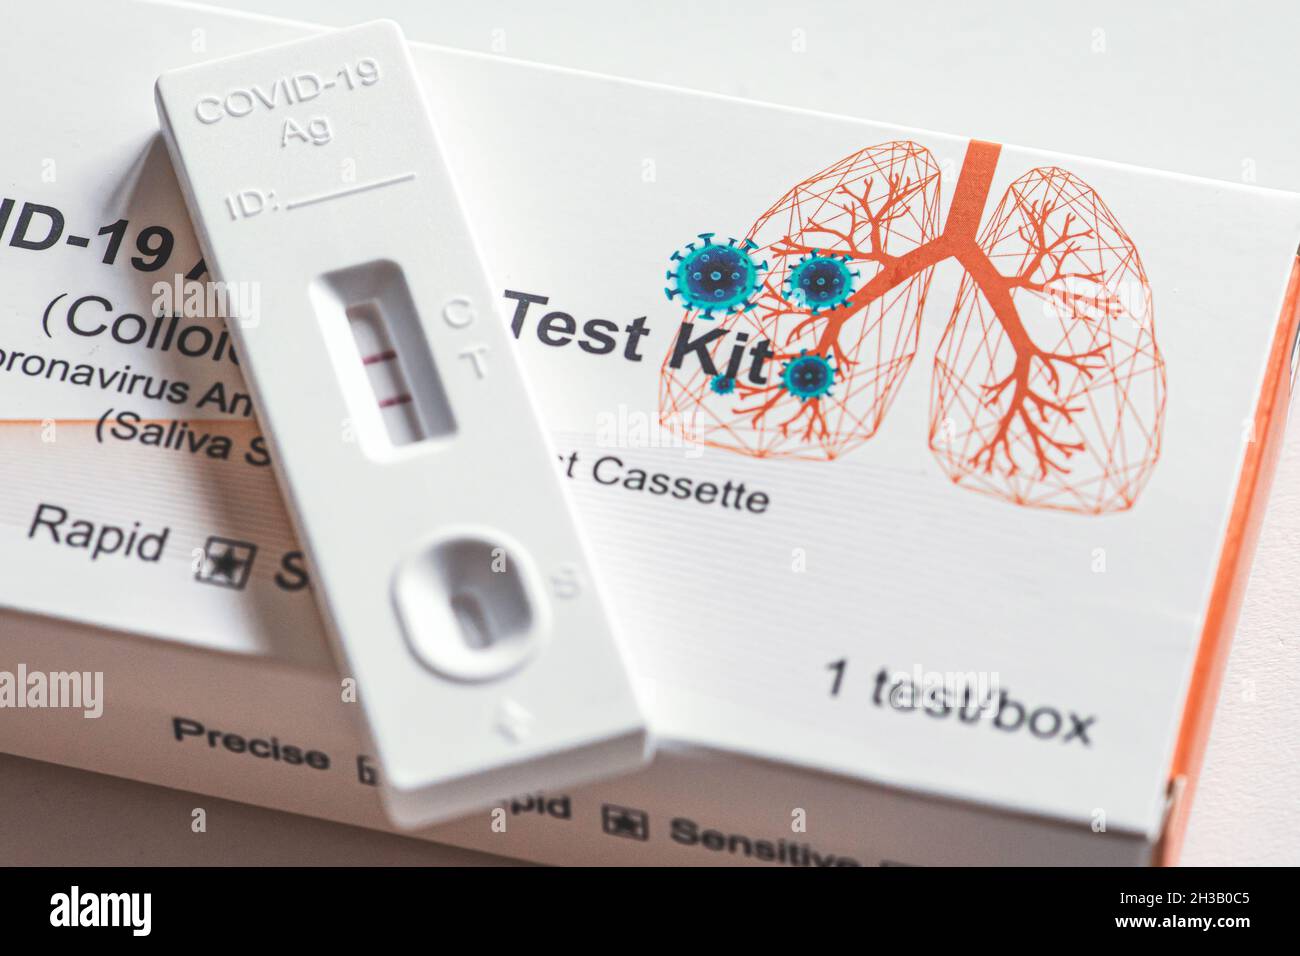 Positive Covid-19 antigen test kit, one step coronavirus antigen rapid test, saliva swab, 1 test box with imagine of lungs, close up Stock Photo